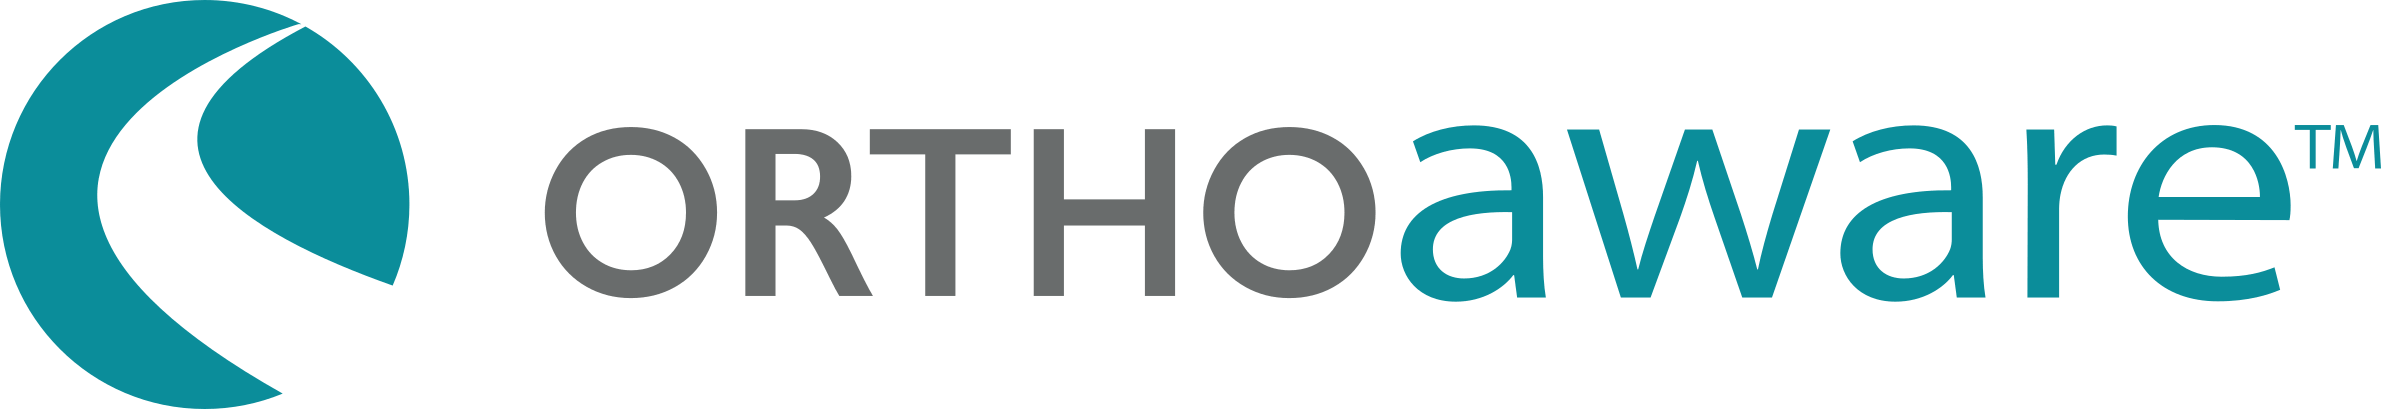 ortho aware logo